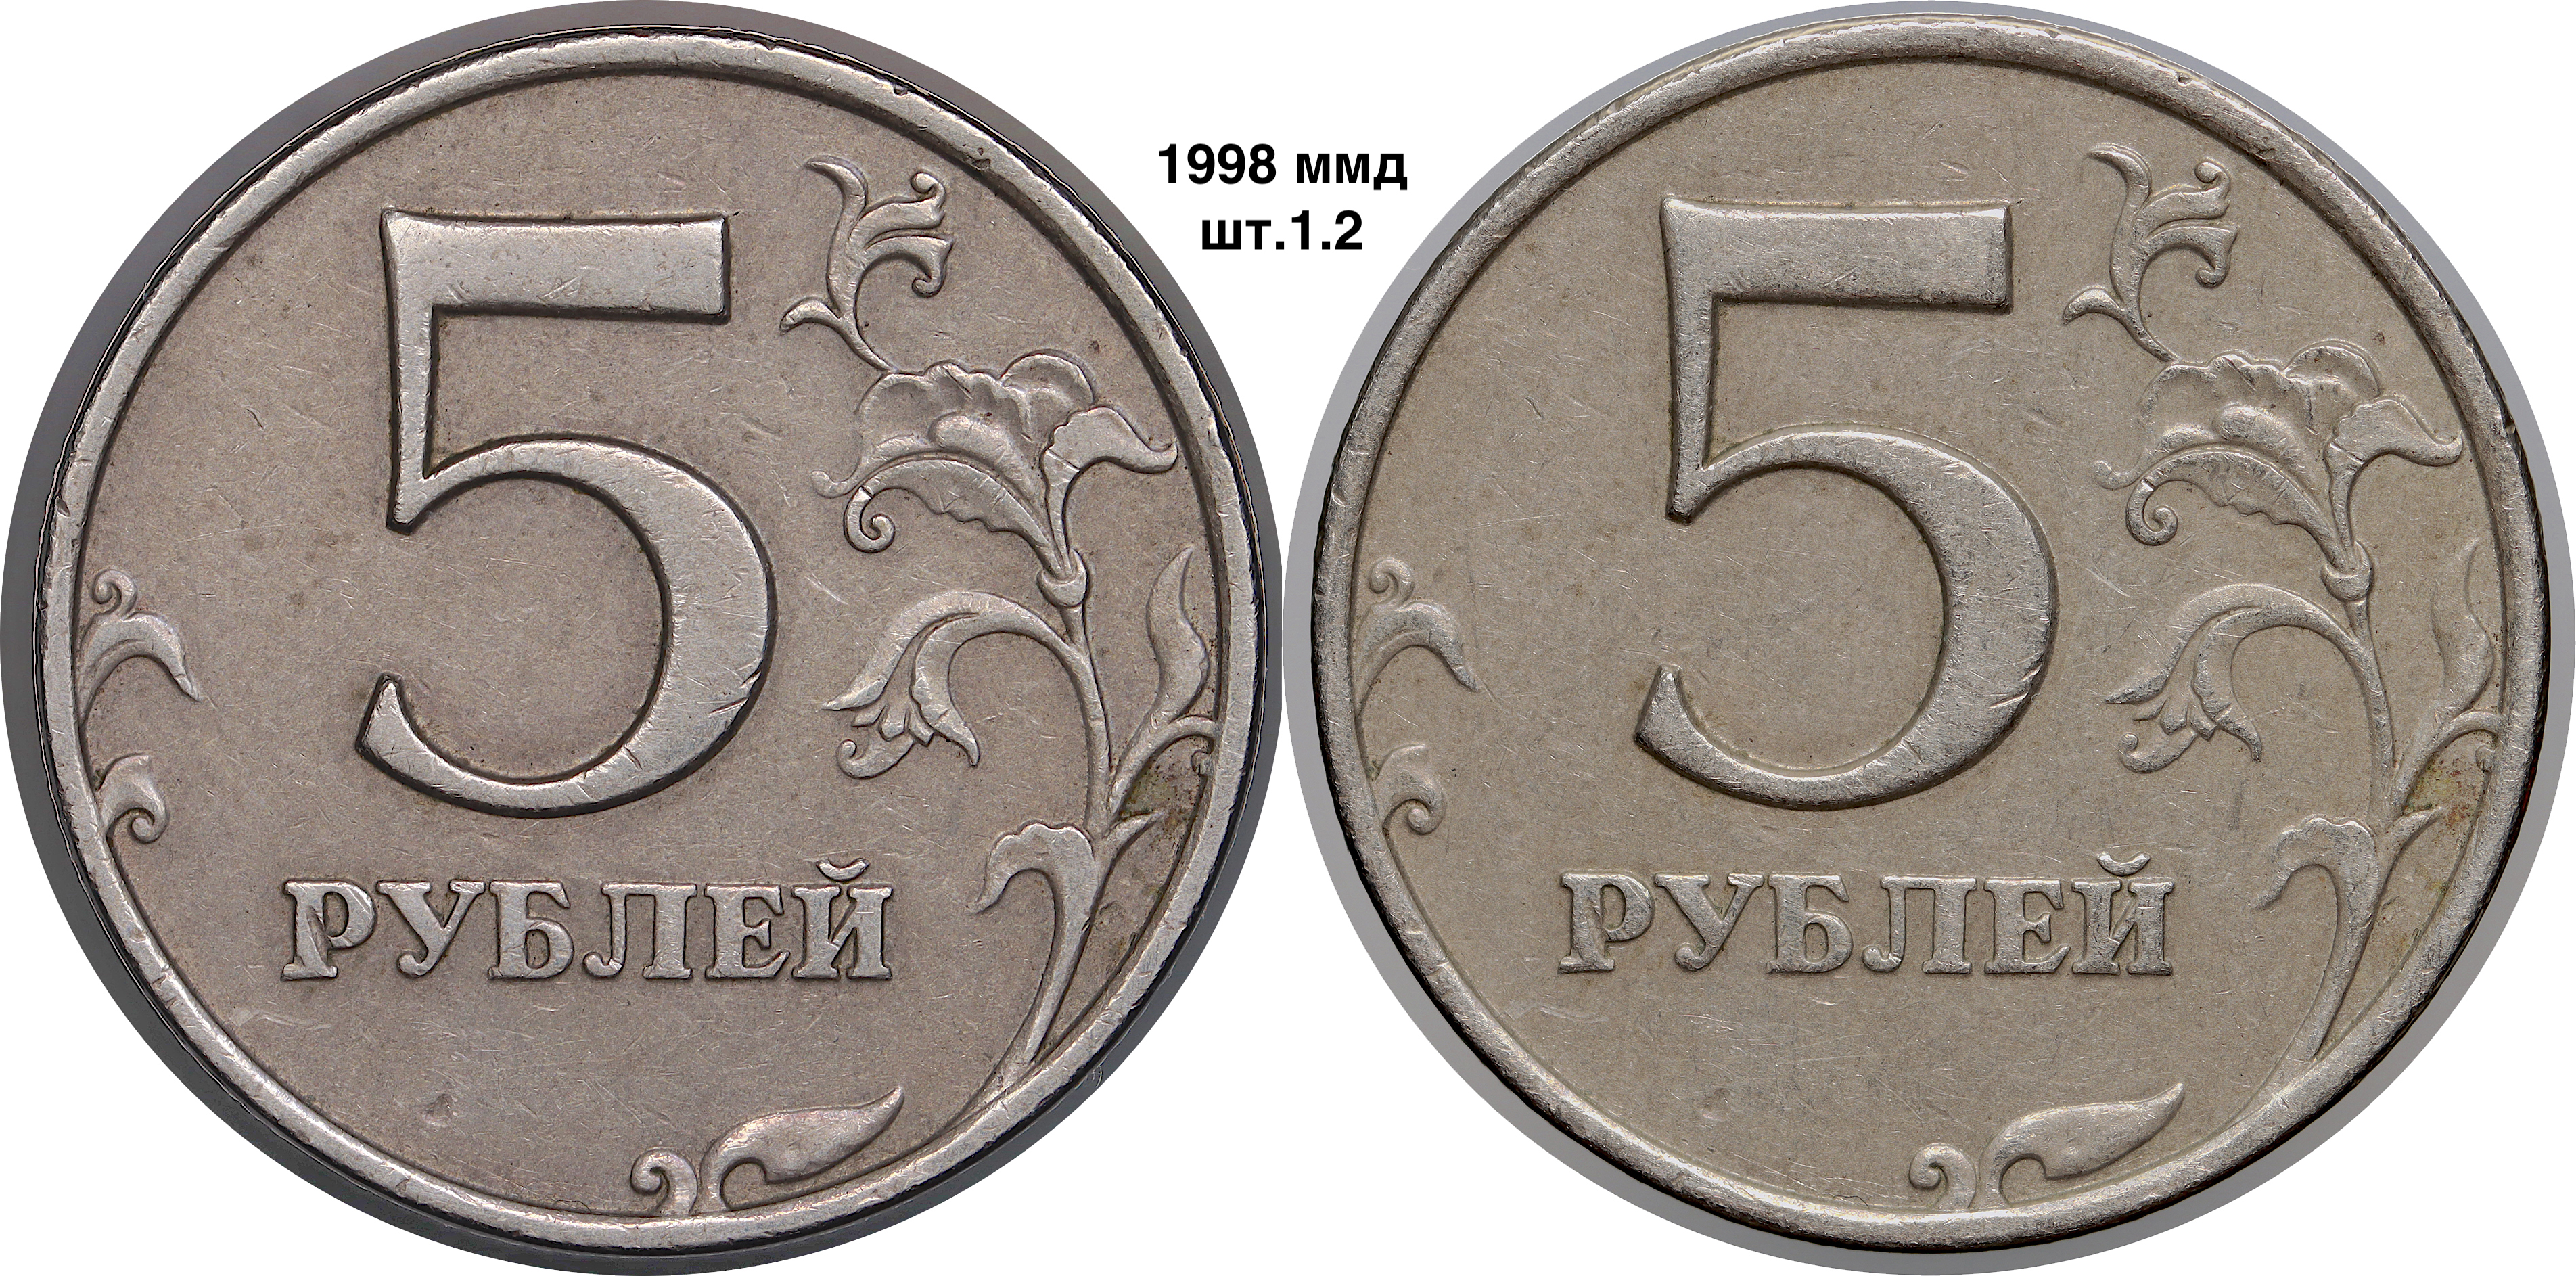 5 рублей 1998 ммд реверс один 1  — копия